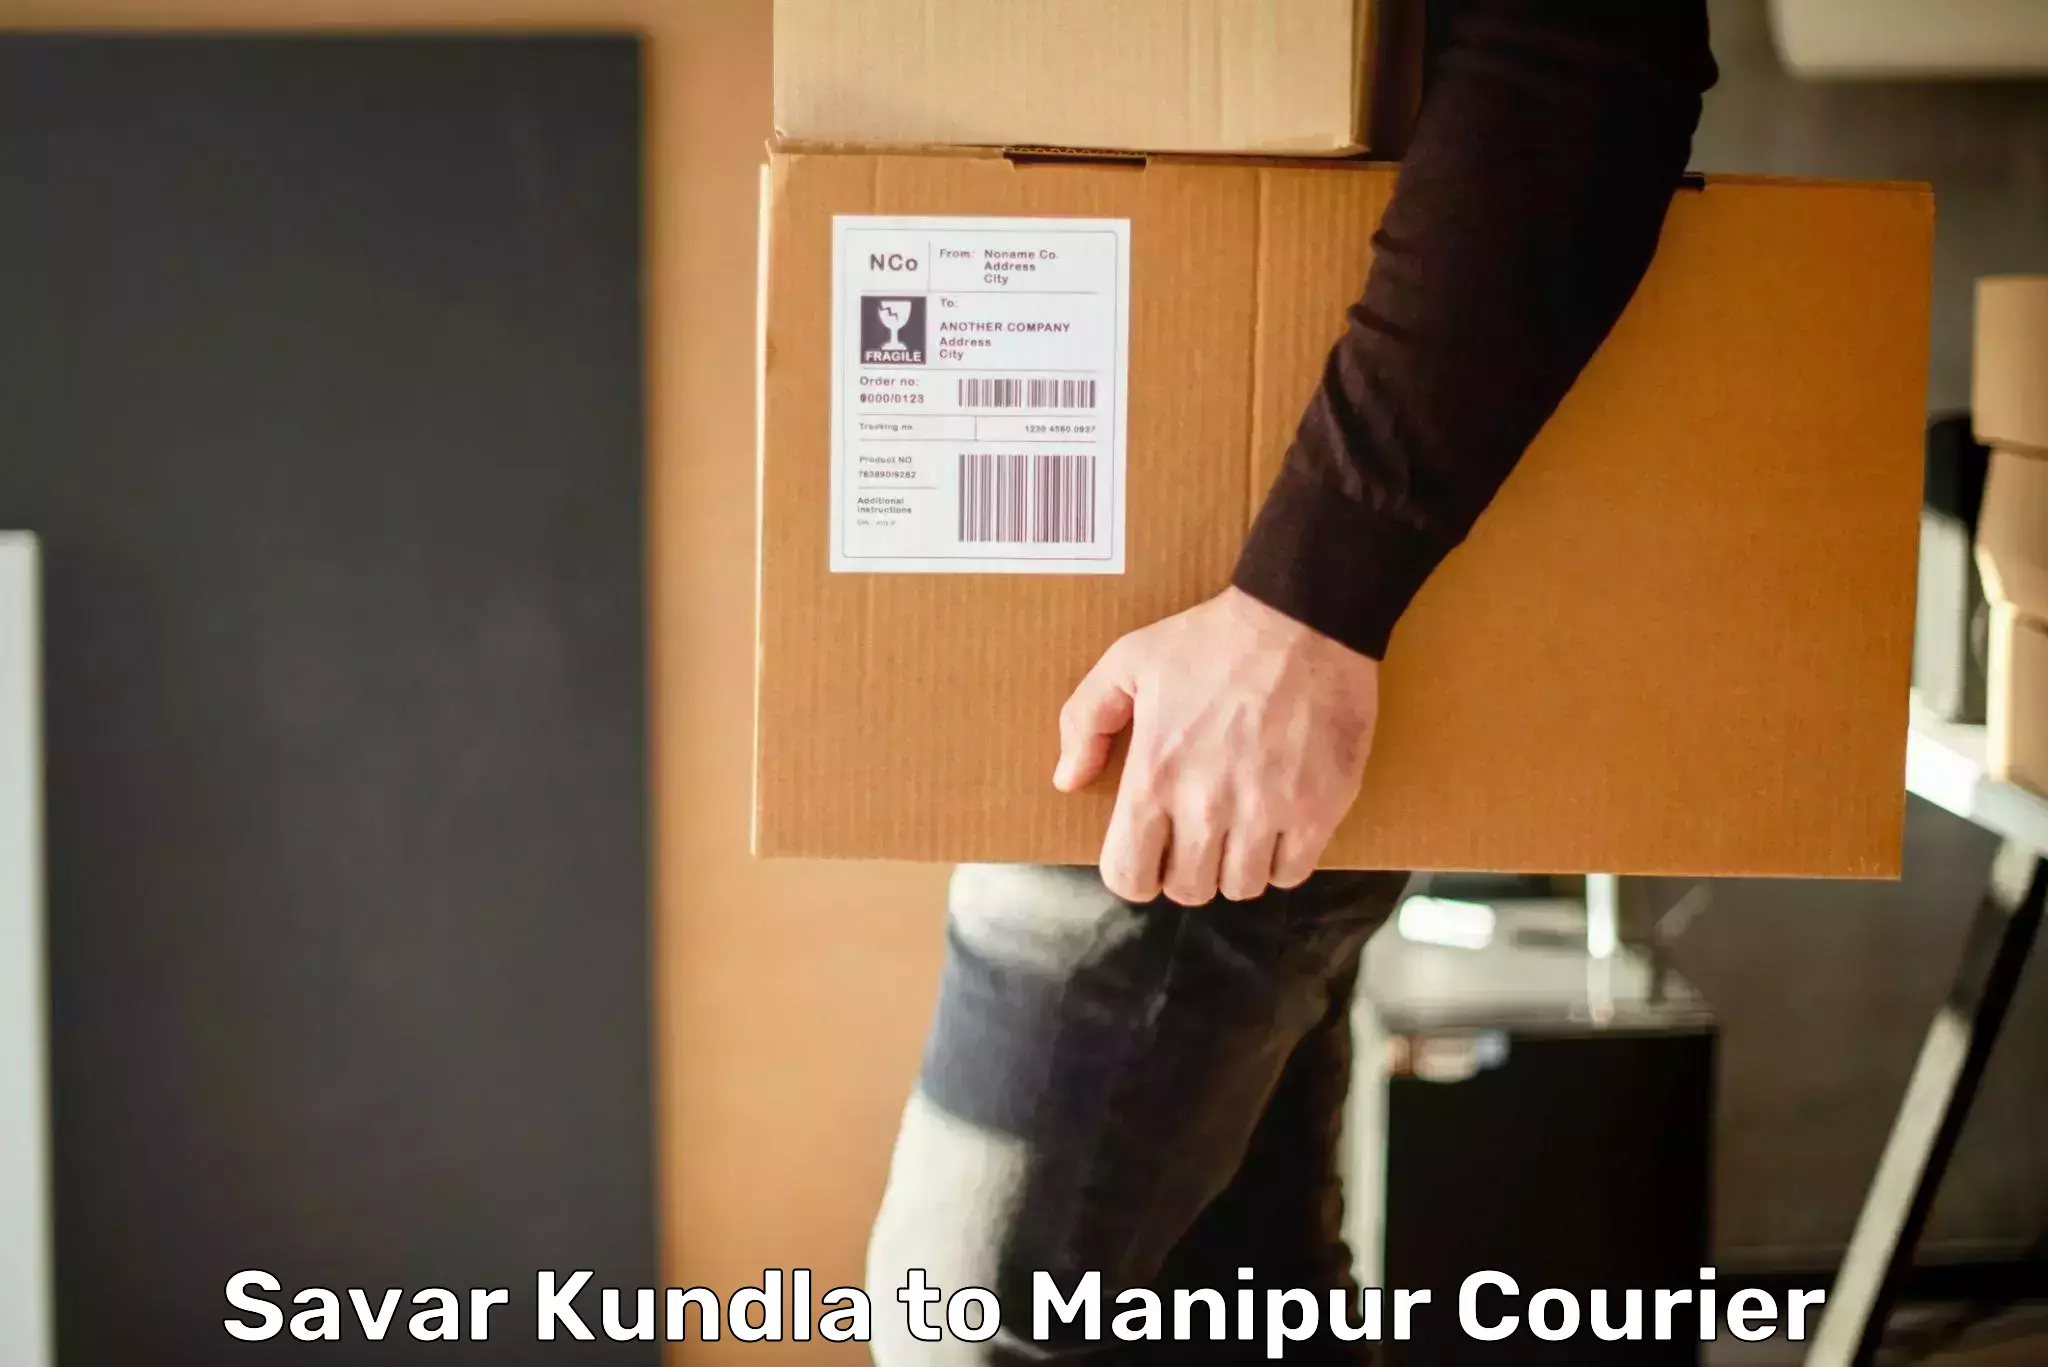 Same-day delivery solutions Savar Kundla to Senapati